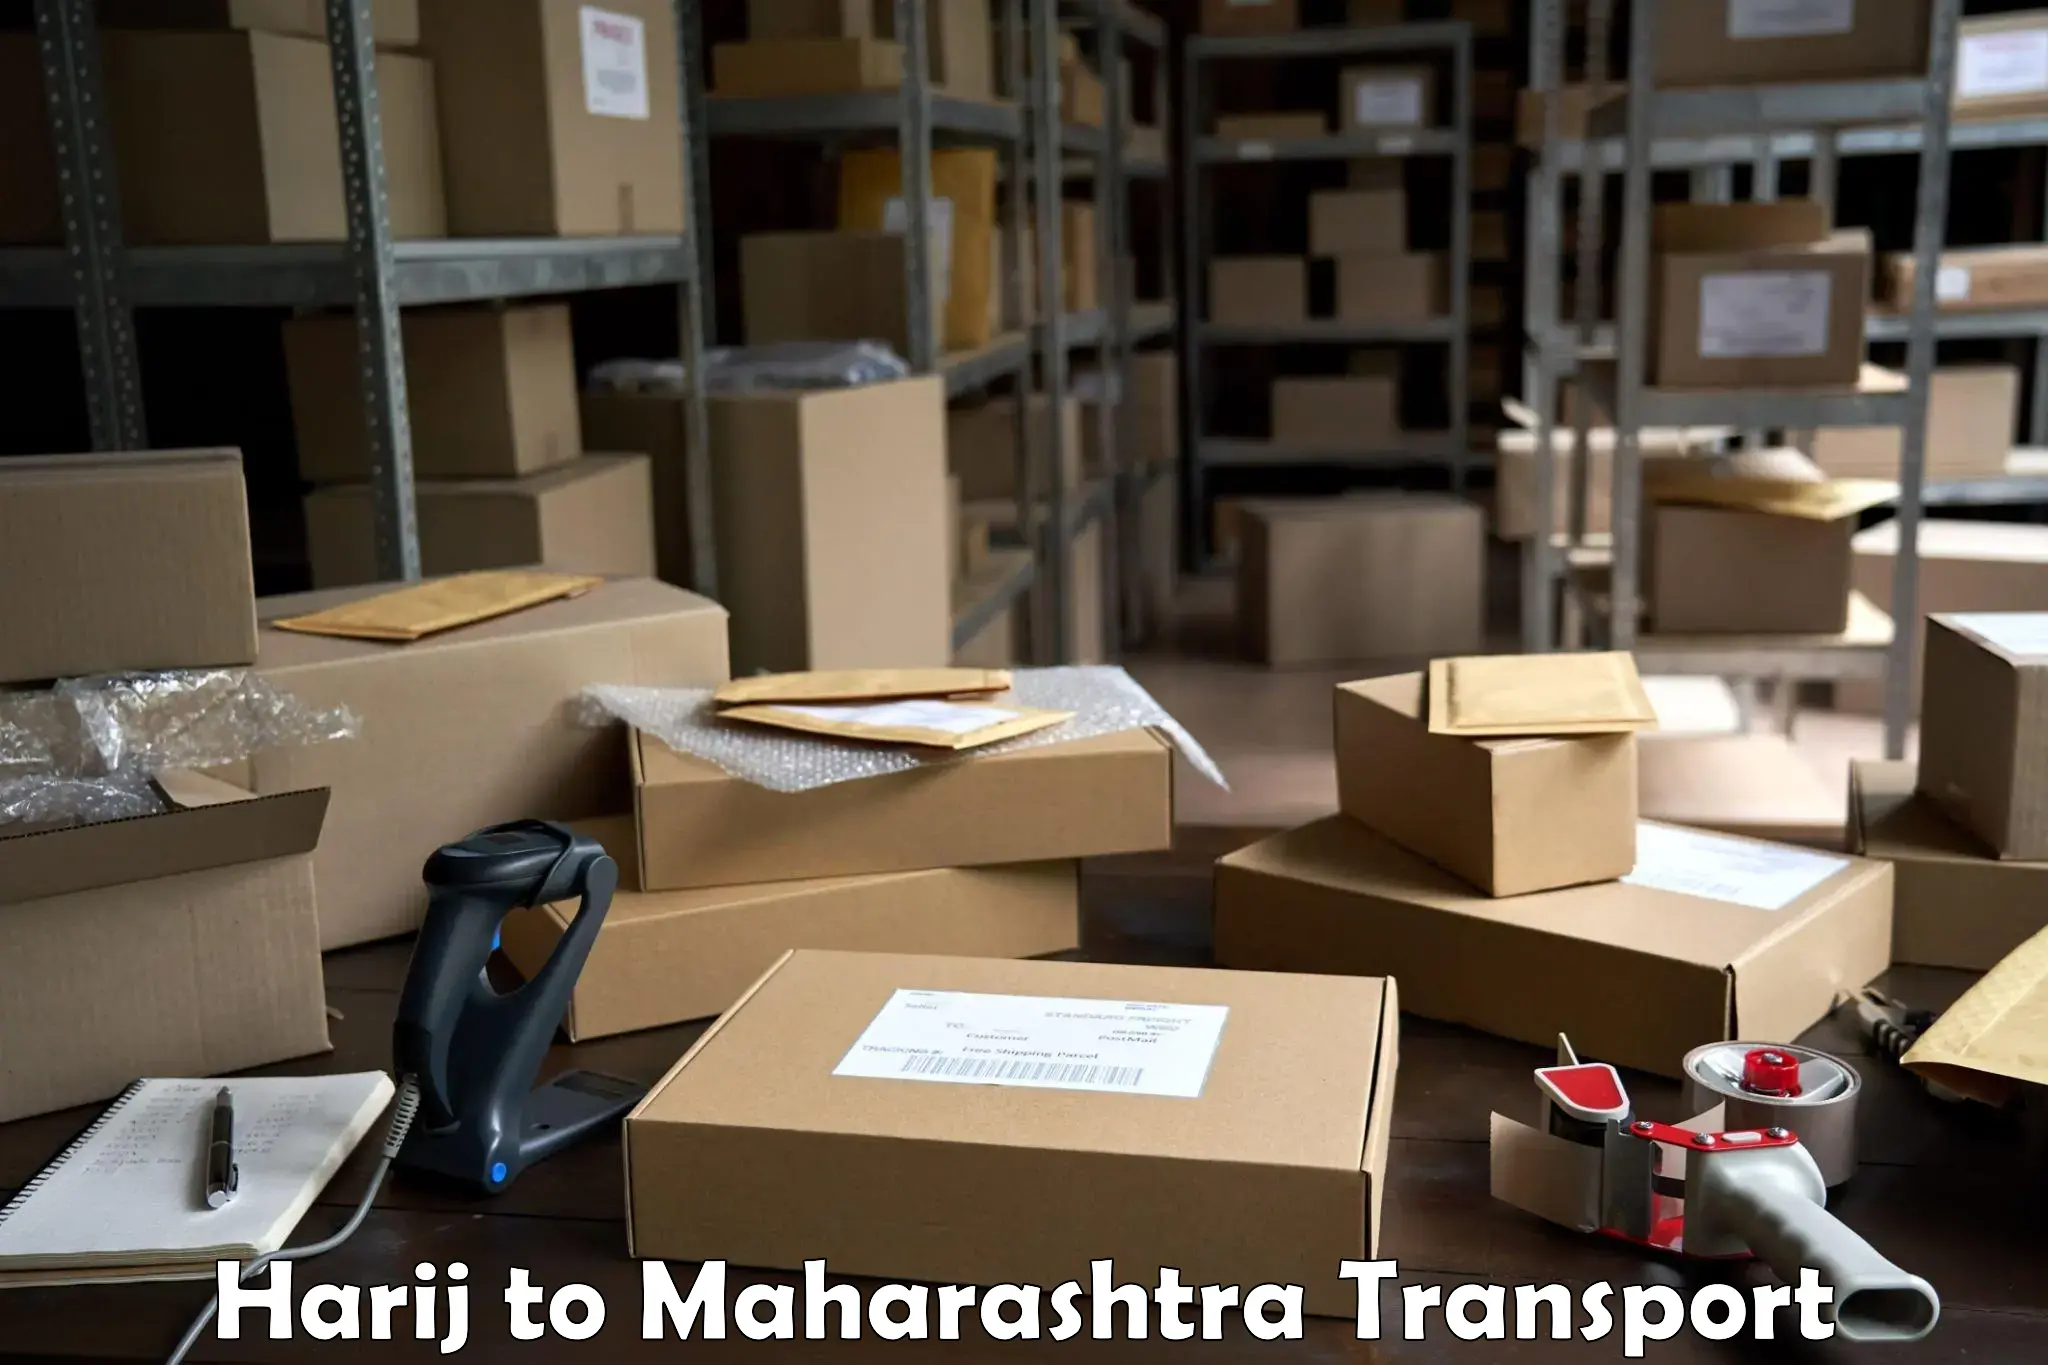 Truck transport companies in India Harij to Mumbai Port